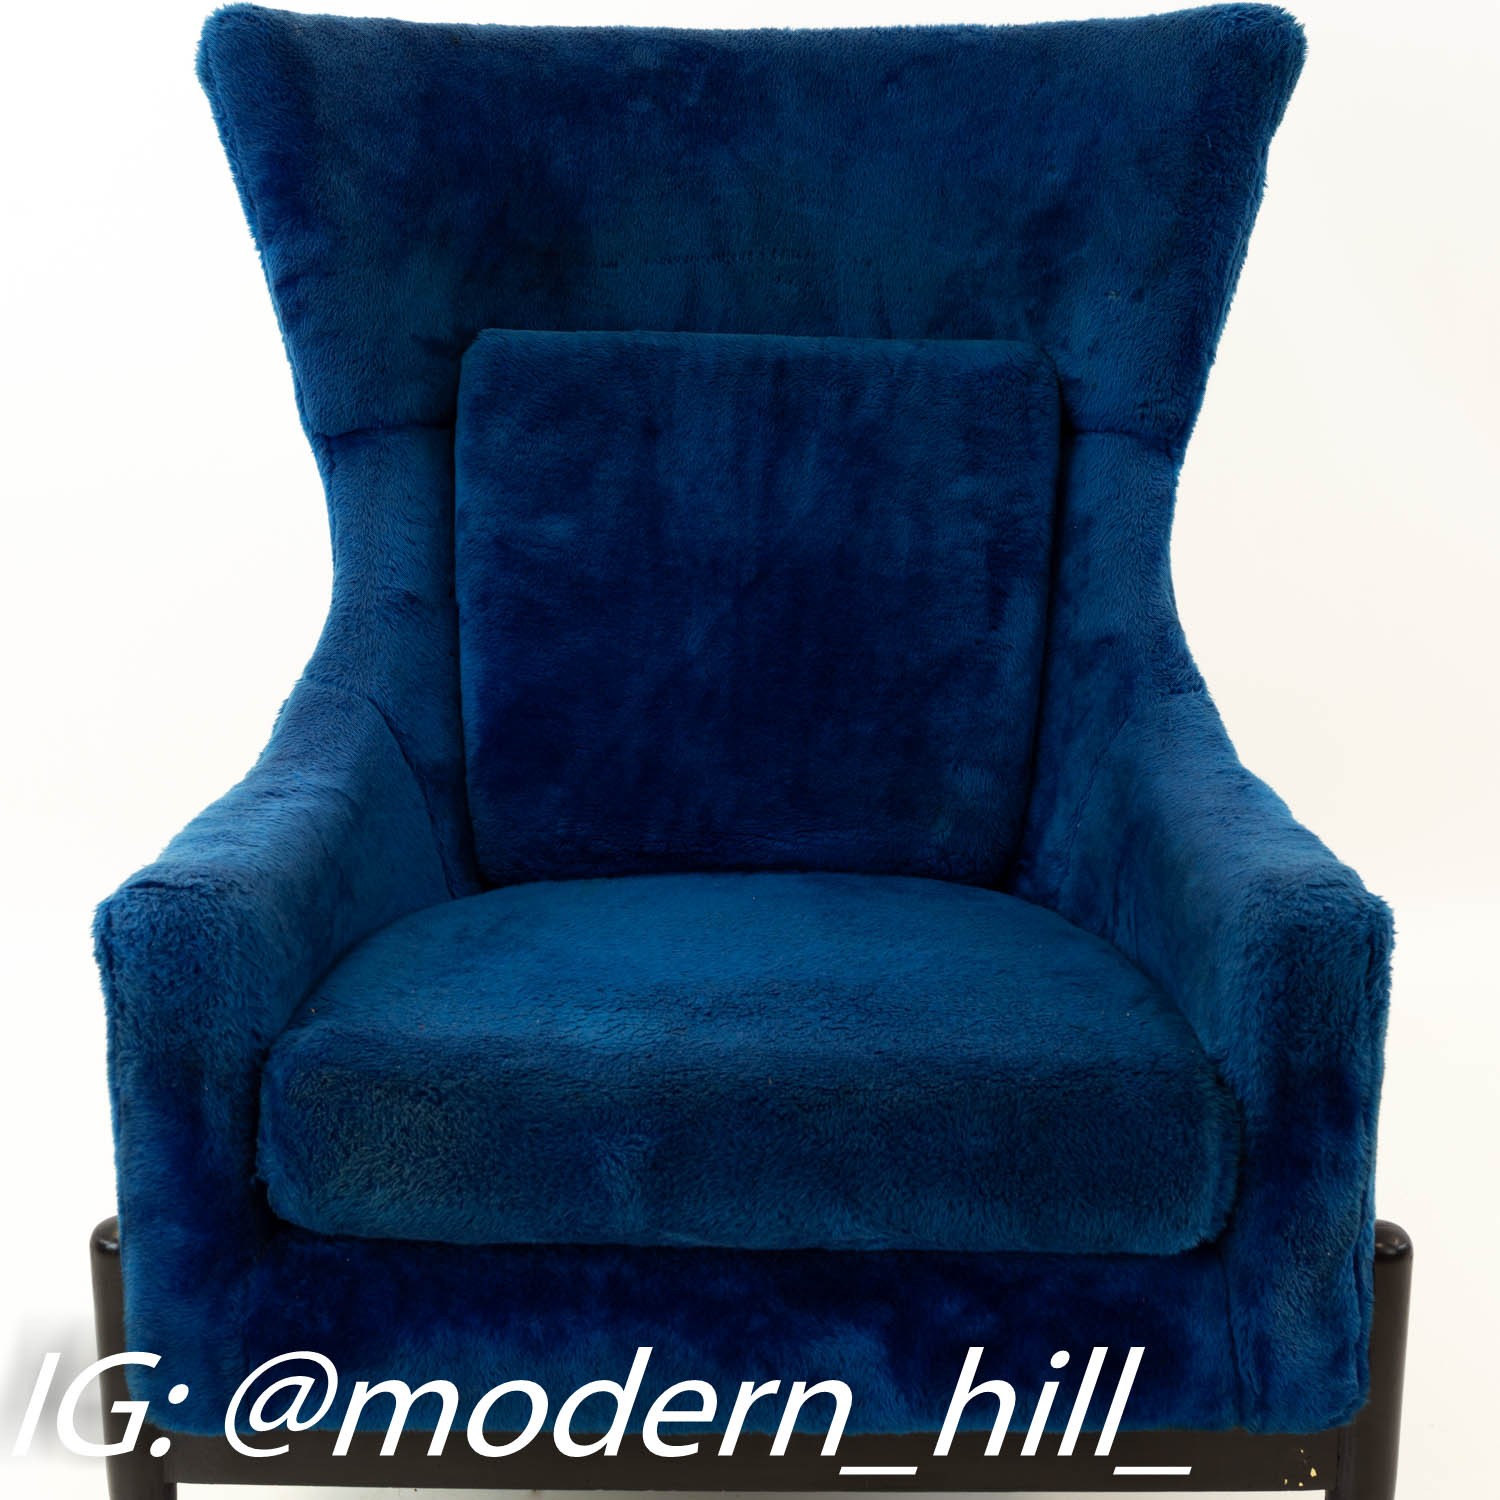 Jens Risom Style Mid Century Kroehler Big Chair & Ottoman